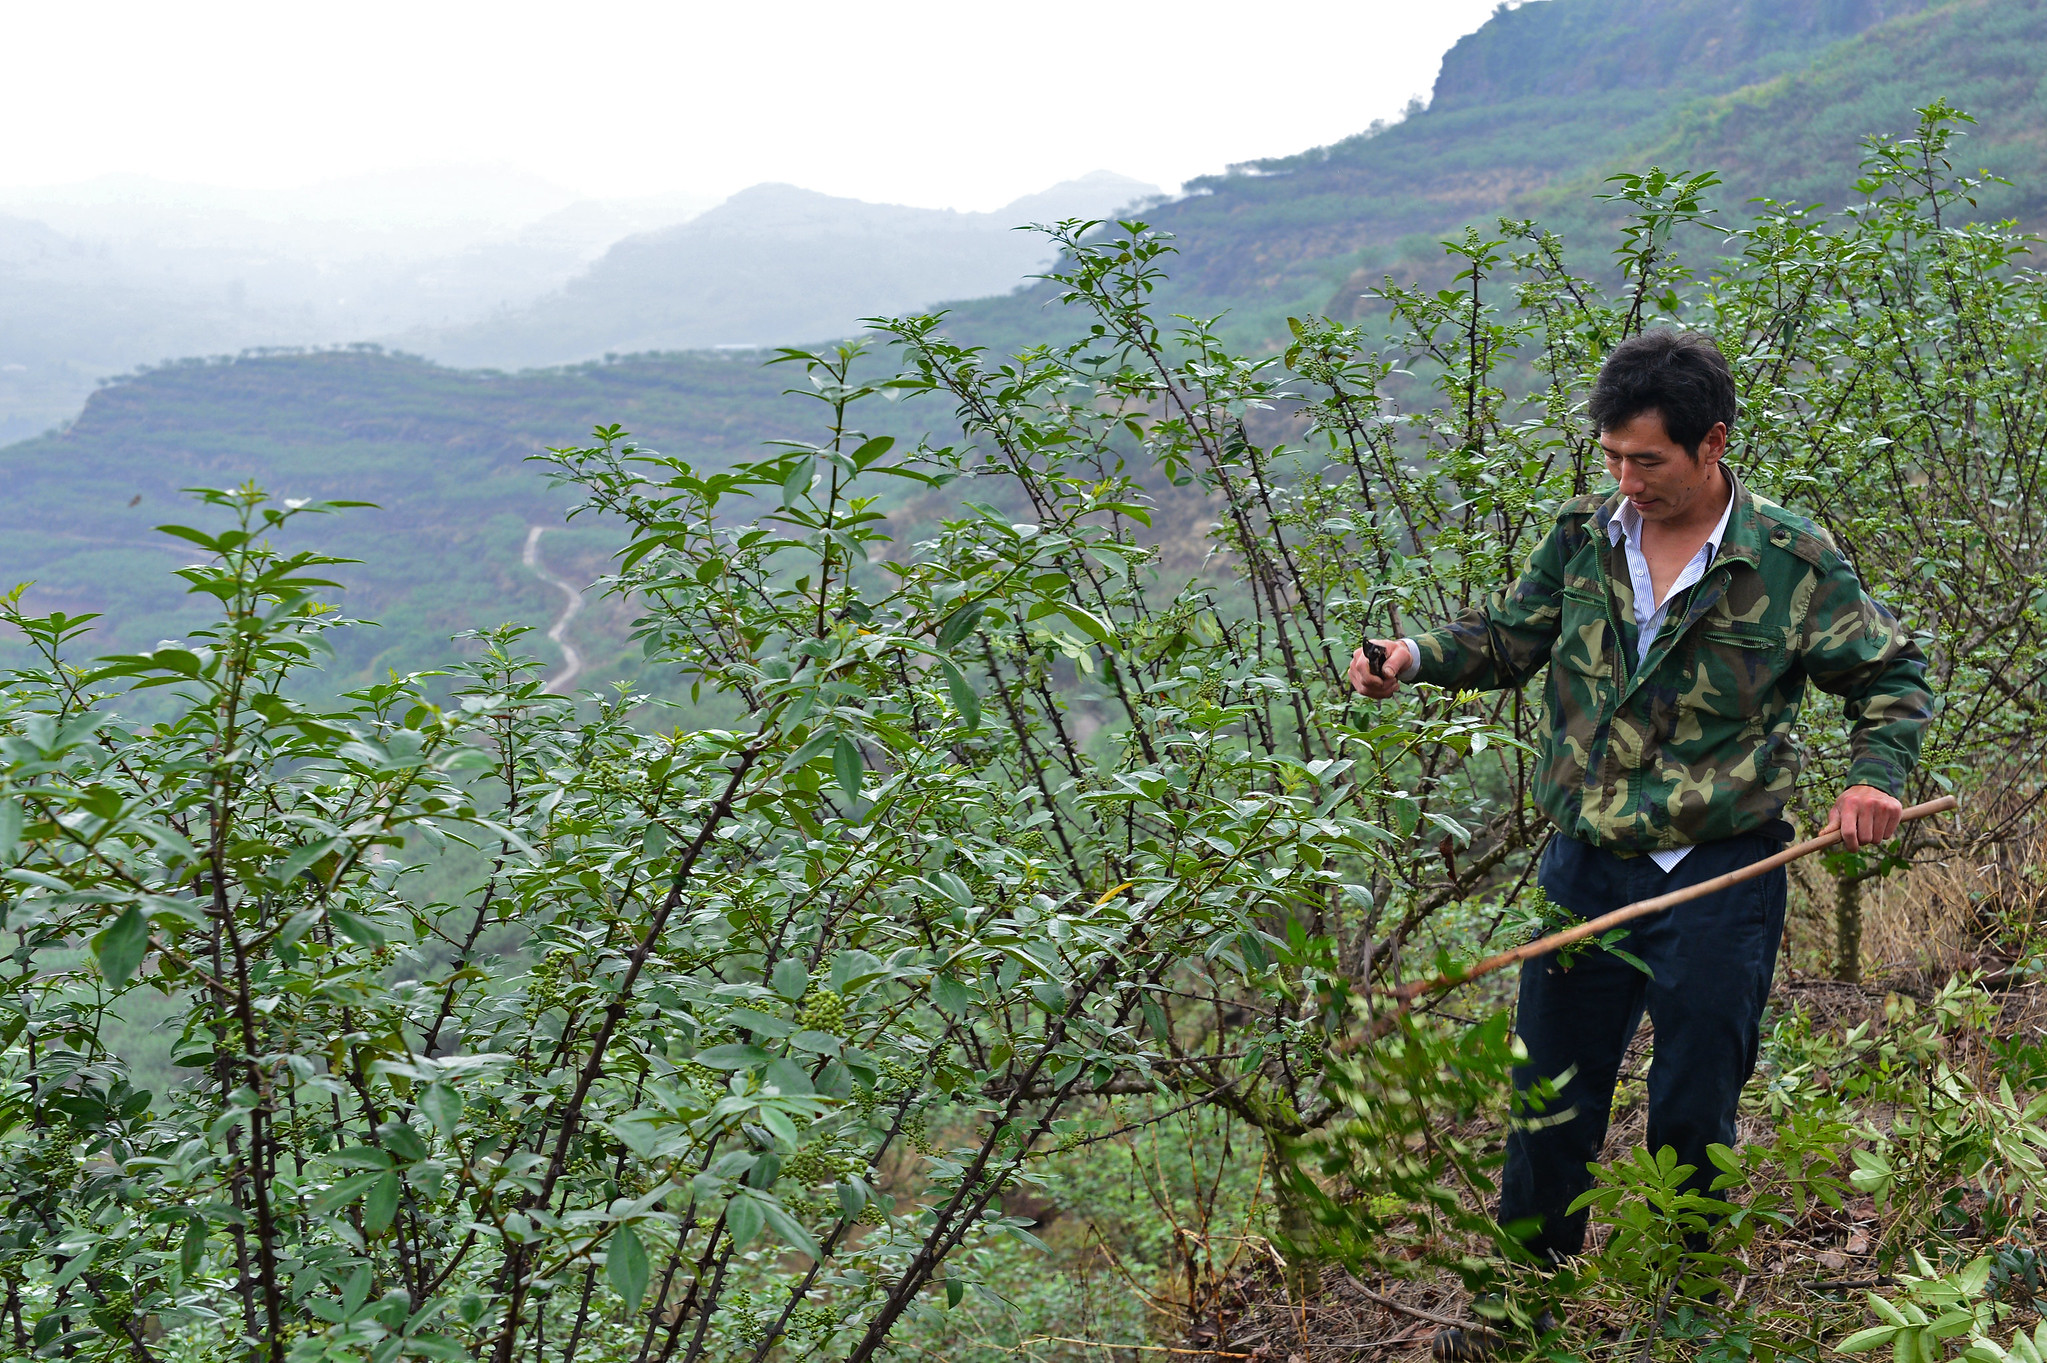 Green pepper farmer prunes his pepper trees in China